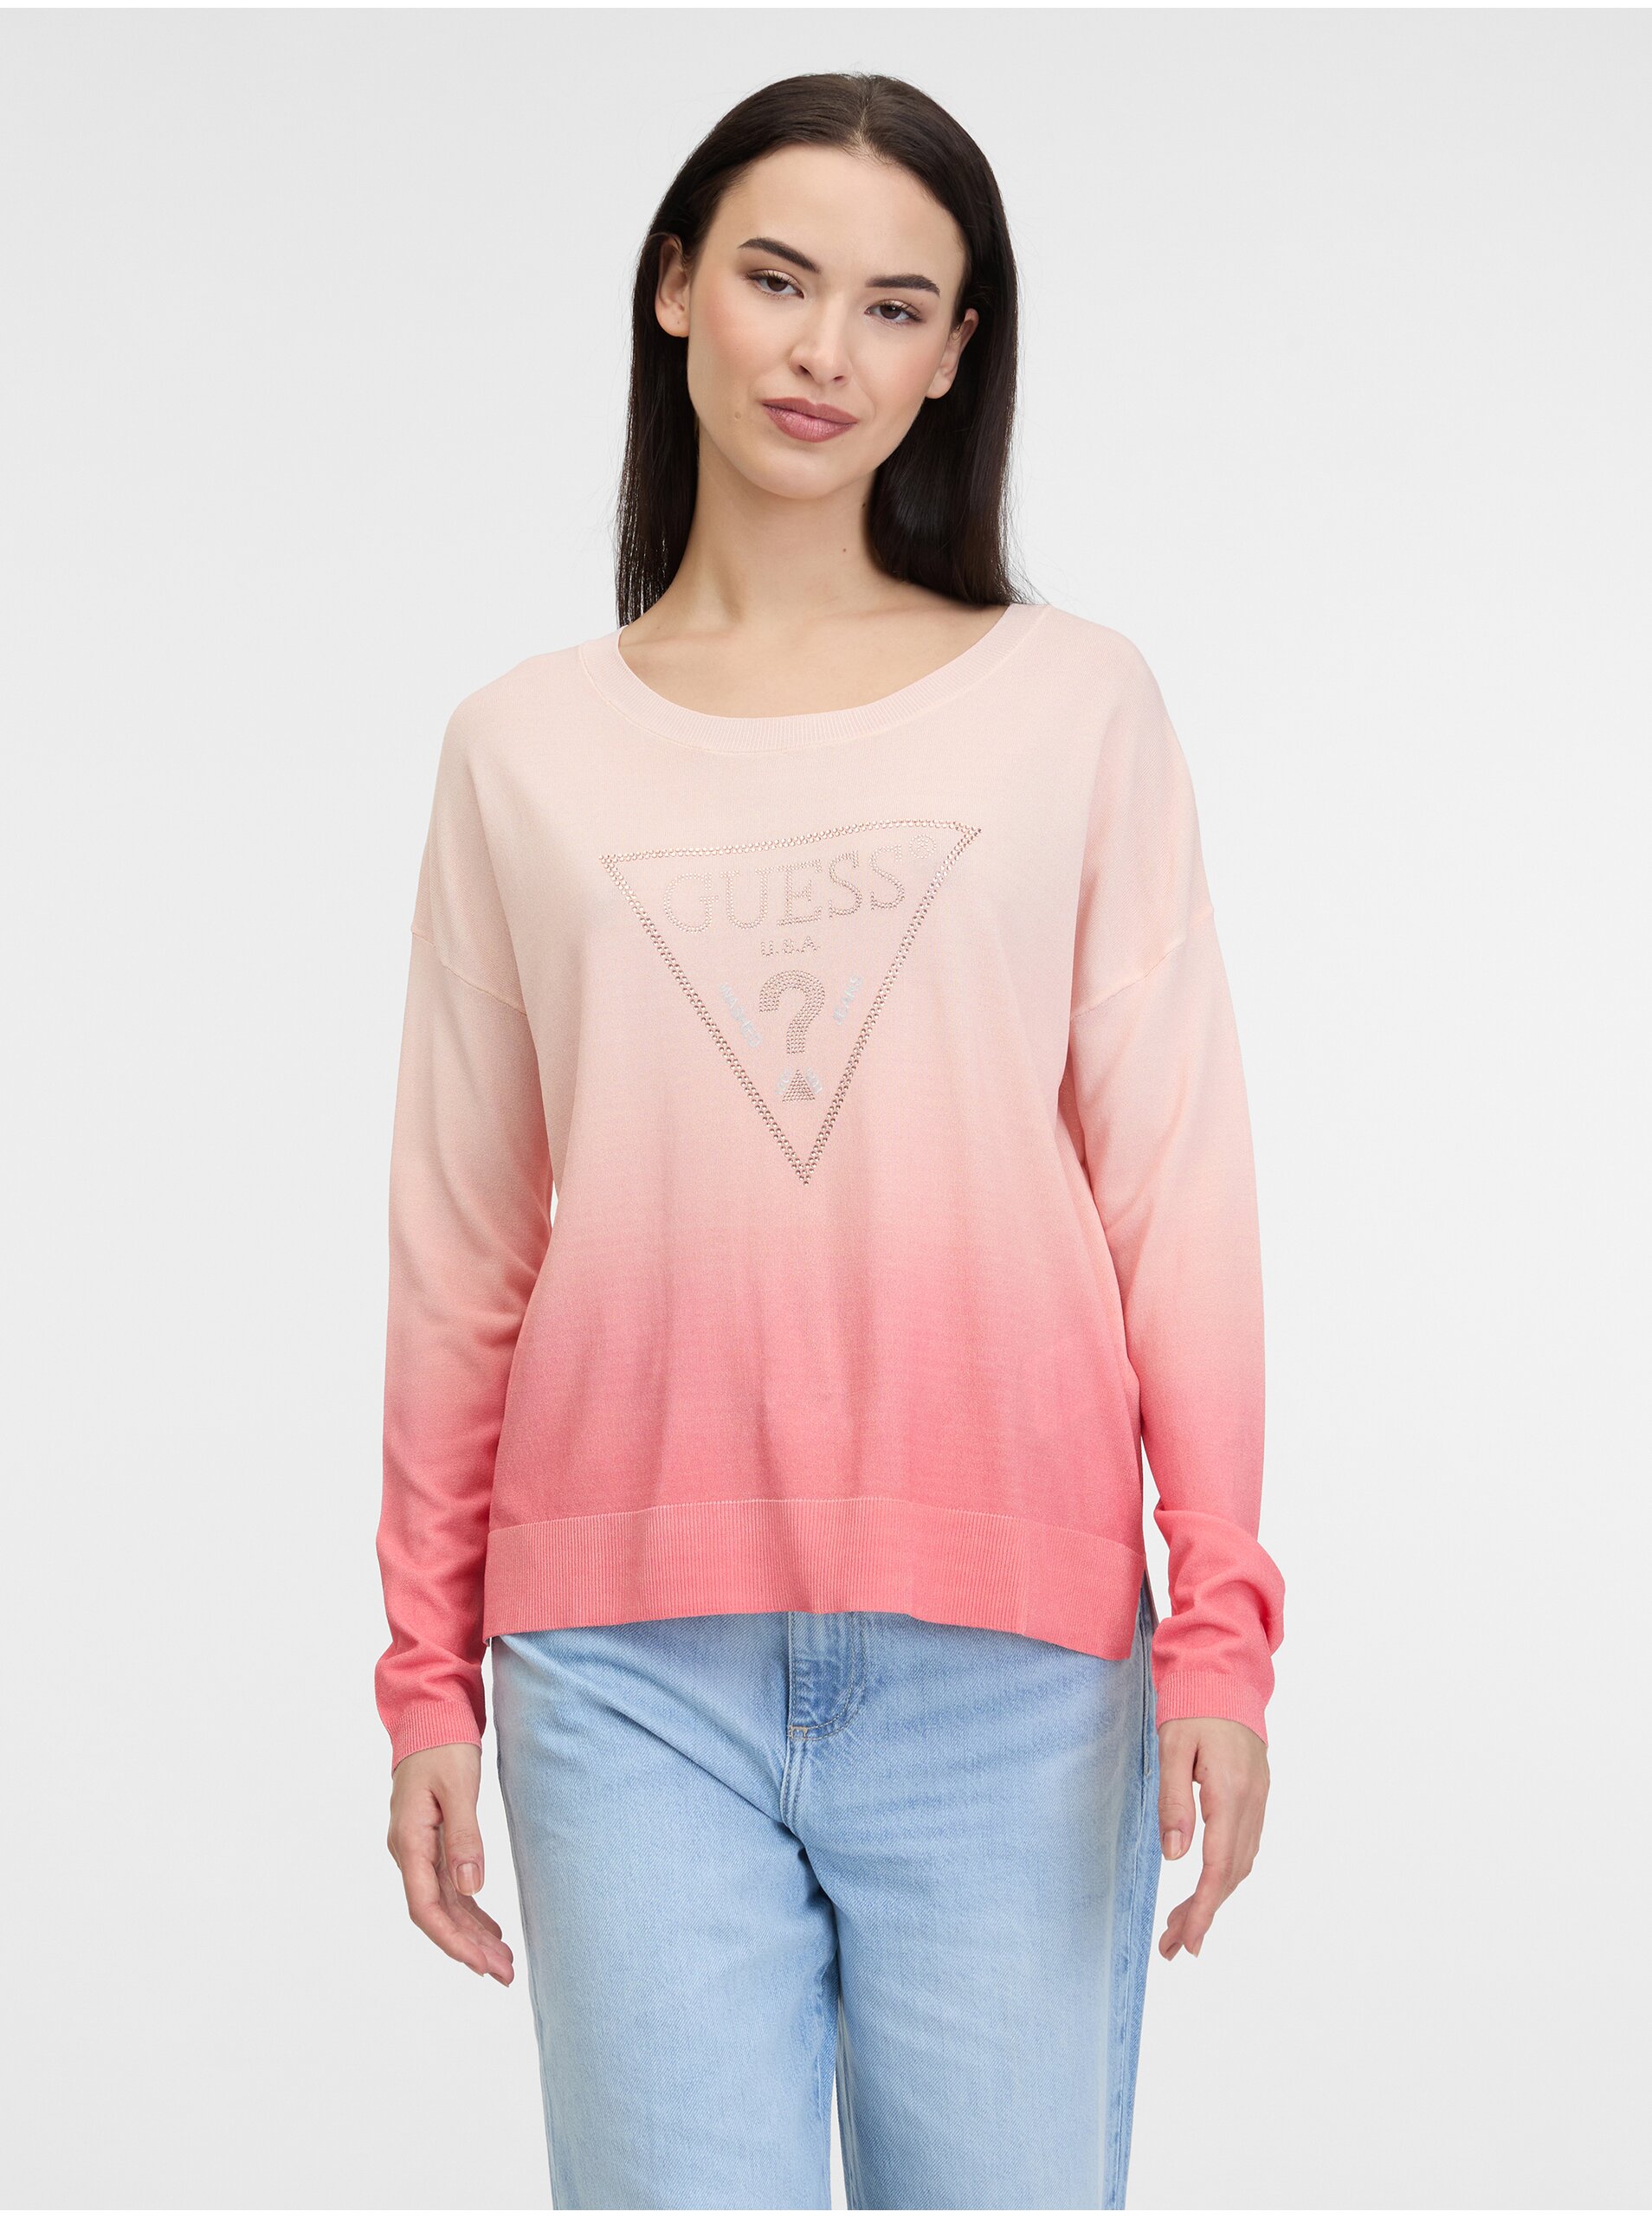 Pink women's sweatshirt Guess Irene - Women